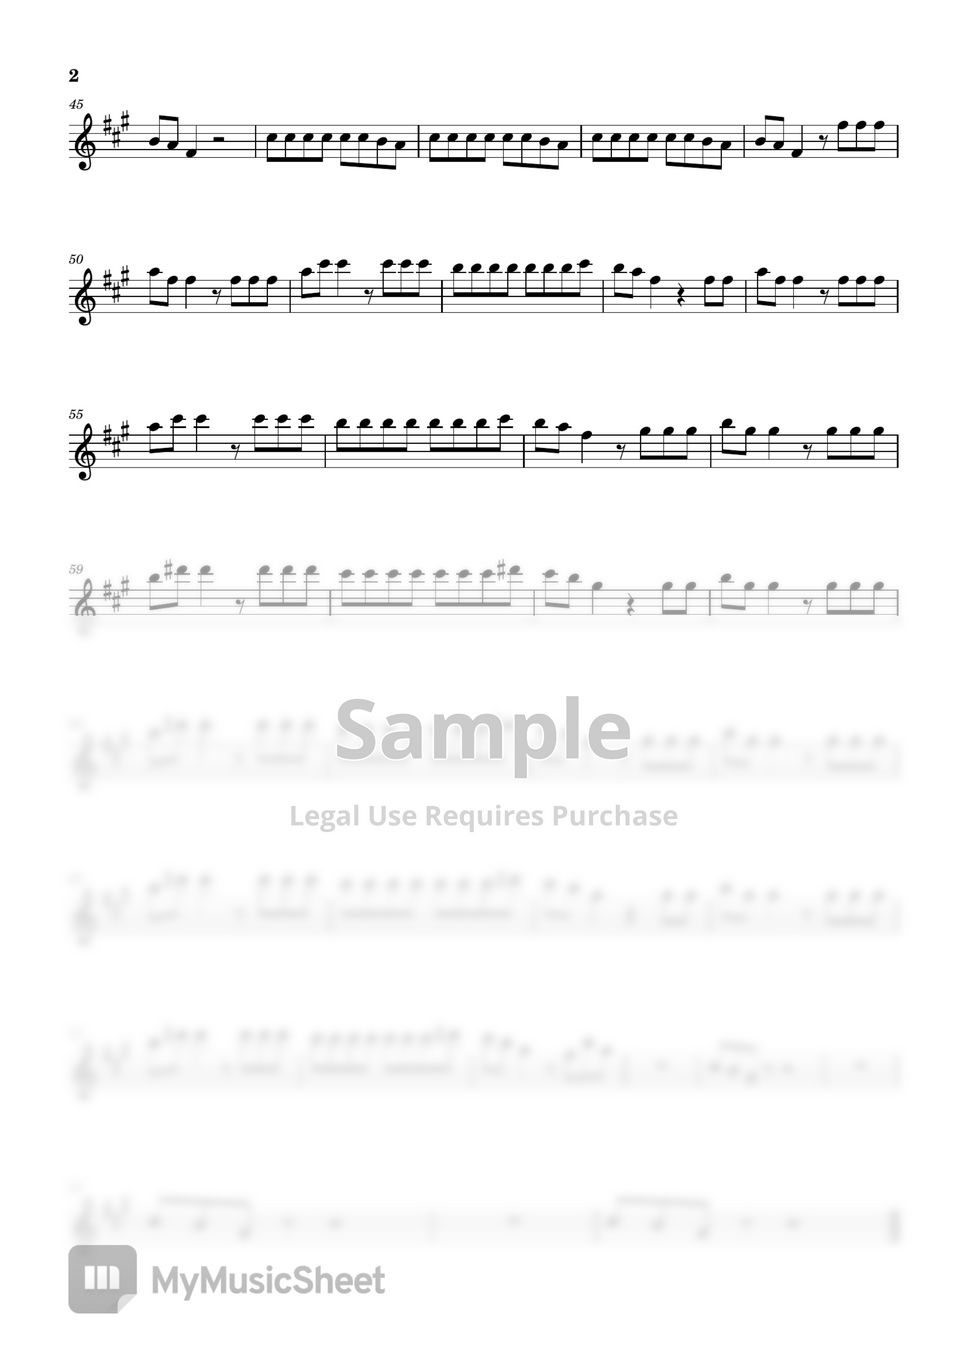 Gummy Bear - The Gummy Bear Song (Baritone Sax) by WendaMusic